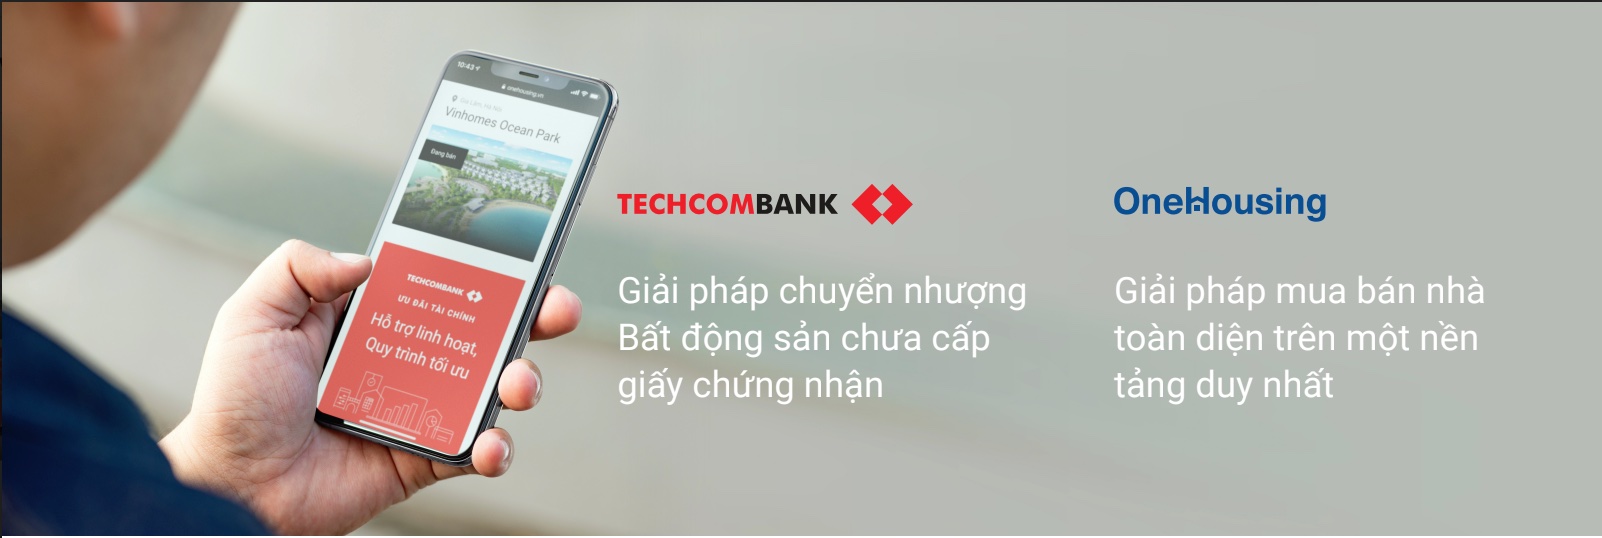 onehousing techcombank vay thu cap giai phap tai chinh vay mua nha